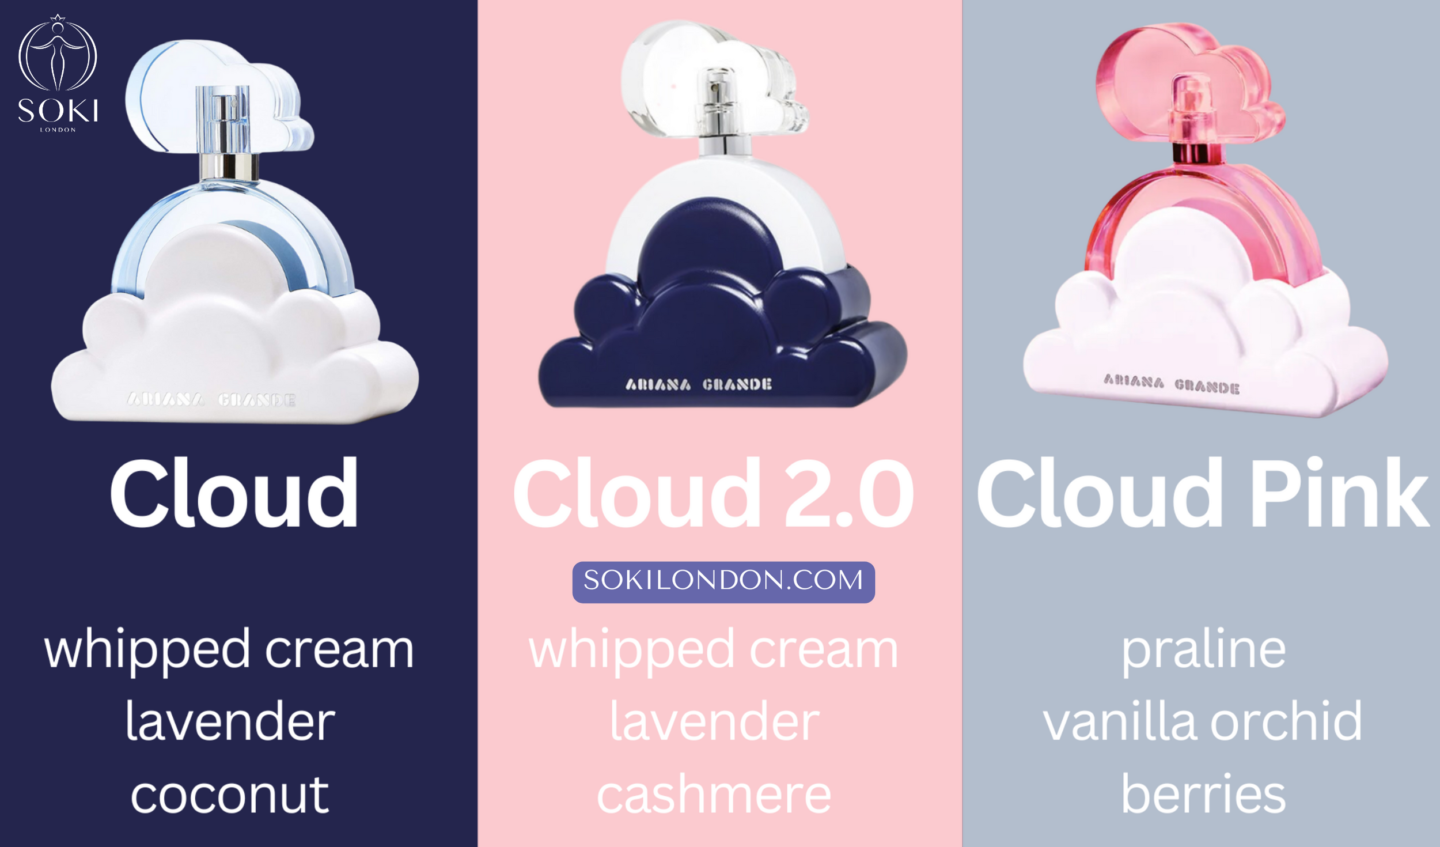 Ariana Grande Cloud gegen Cloud 2.0 gegen Cloud Pink-2